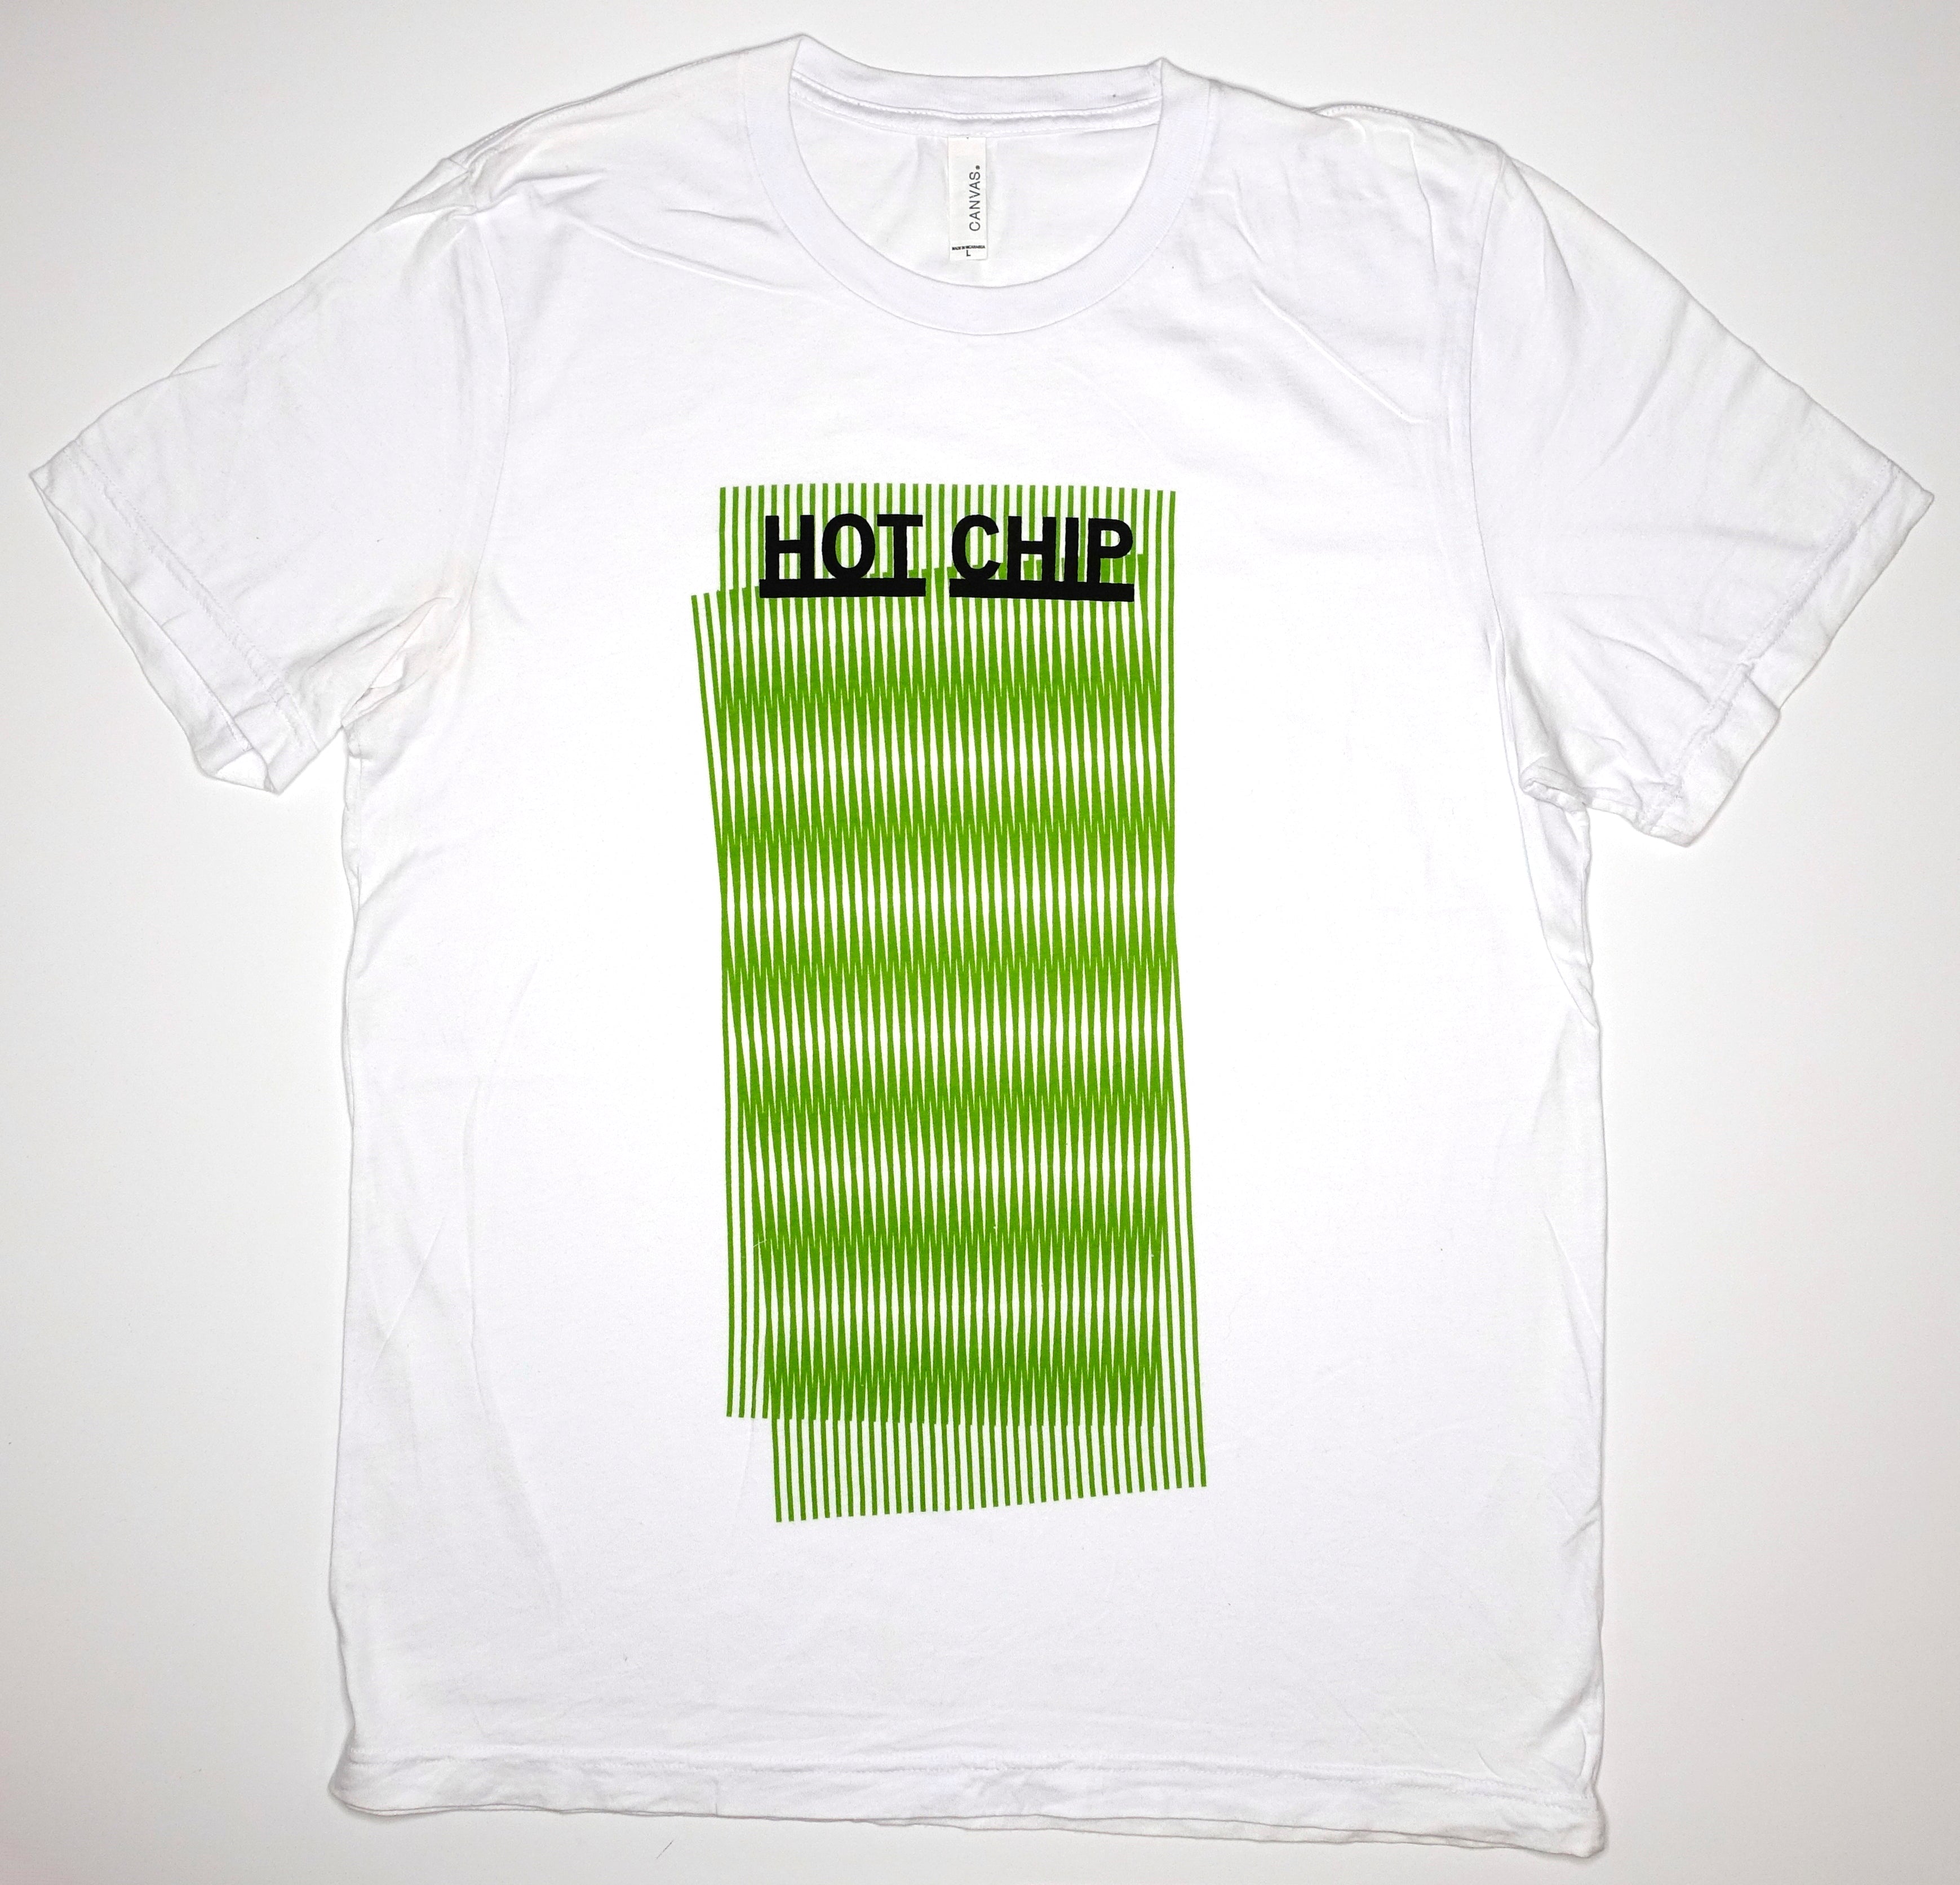 Hot Chip - Why Make Sense? 2015 Tour Shirt (White) Size Large